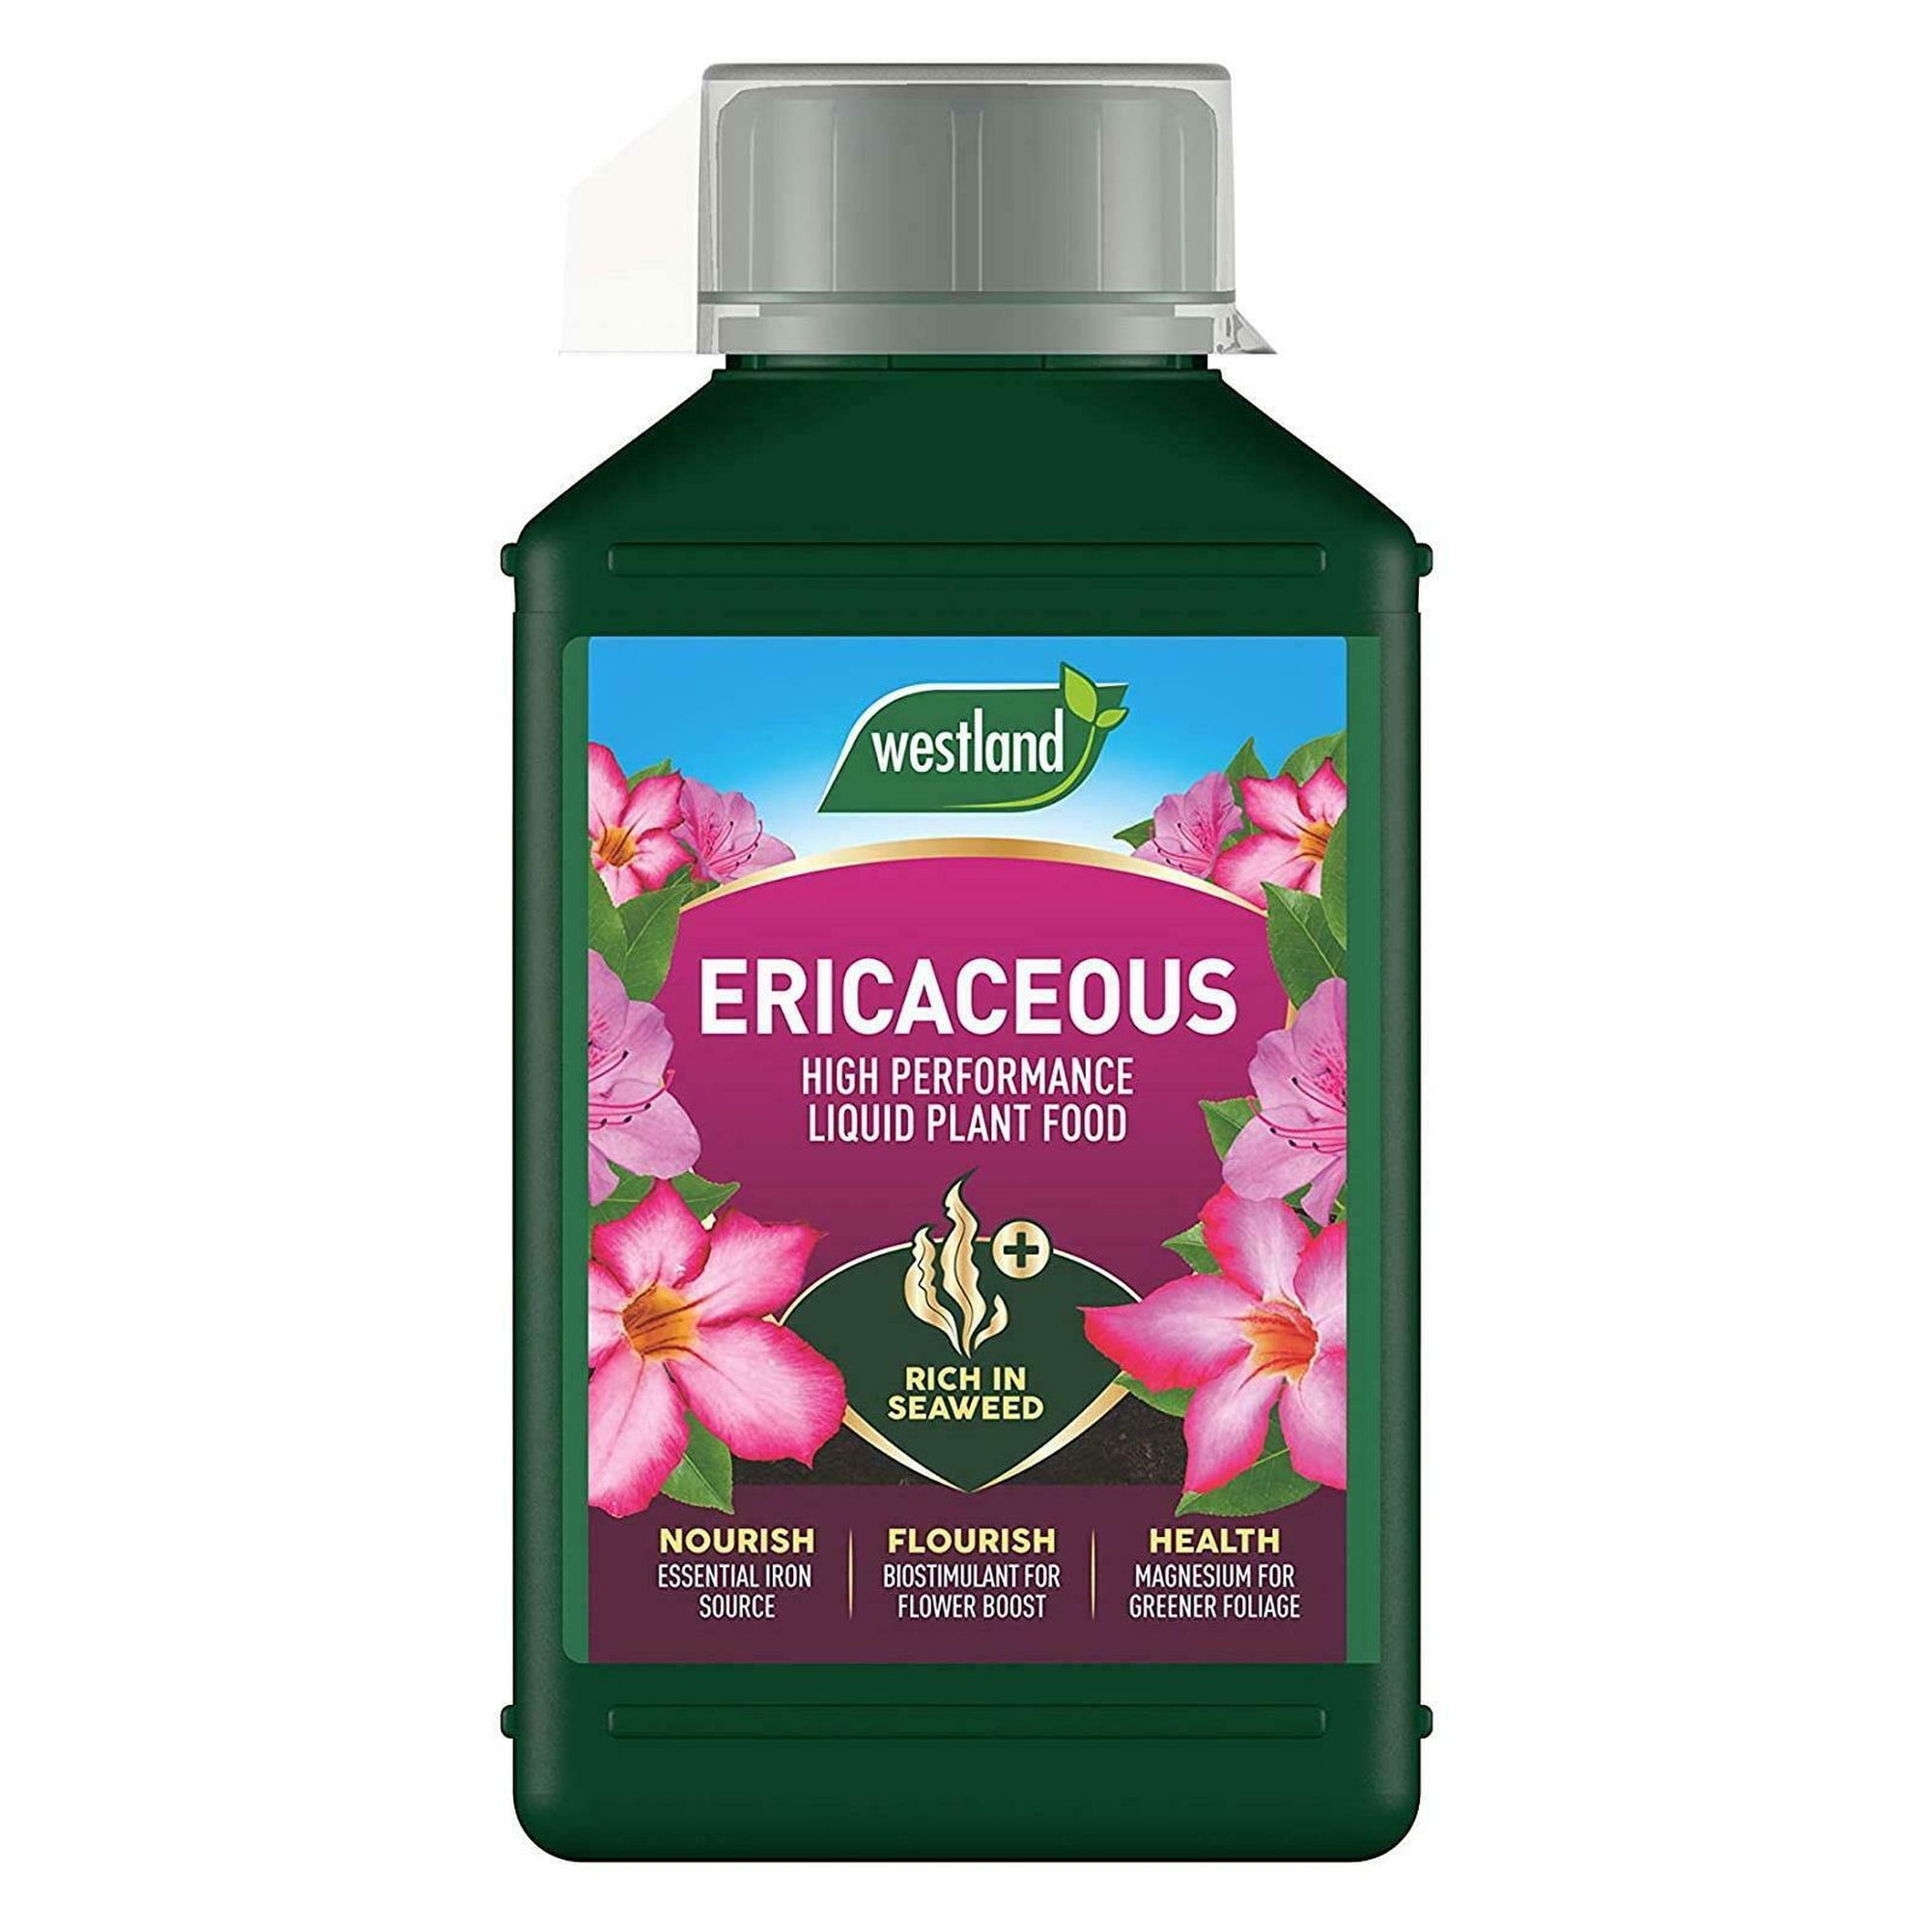 Ericaceous Liquid Plant Food